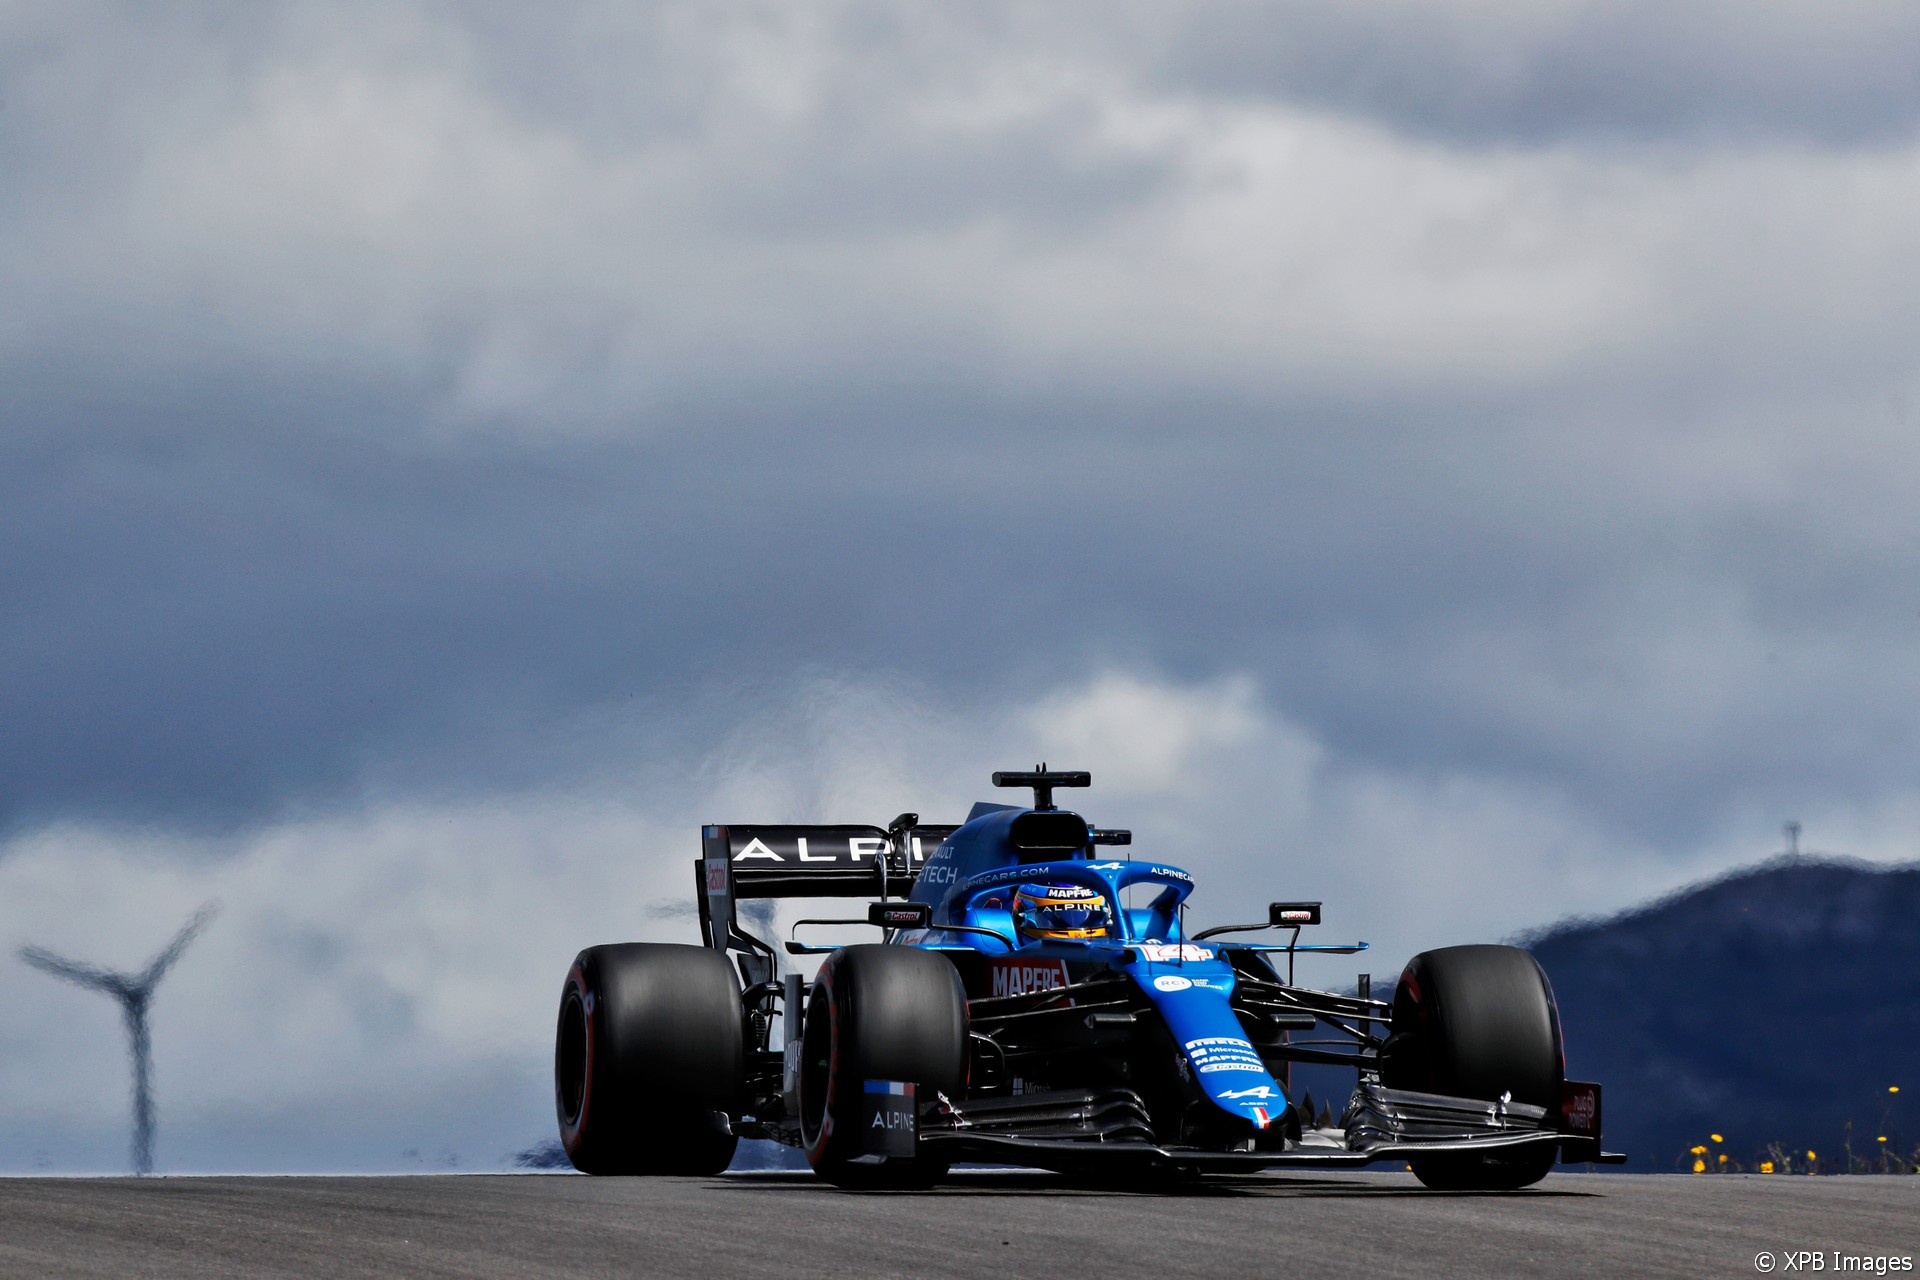 Fernando Alonso, Alpine, Autodromo do Algarve, 2021